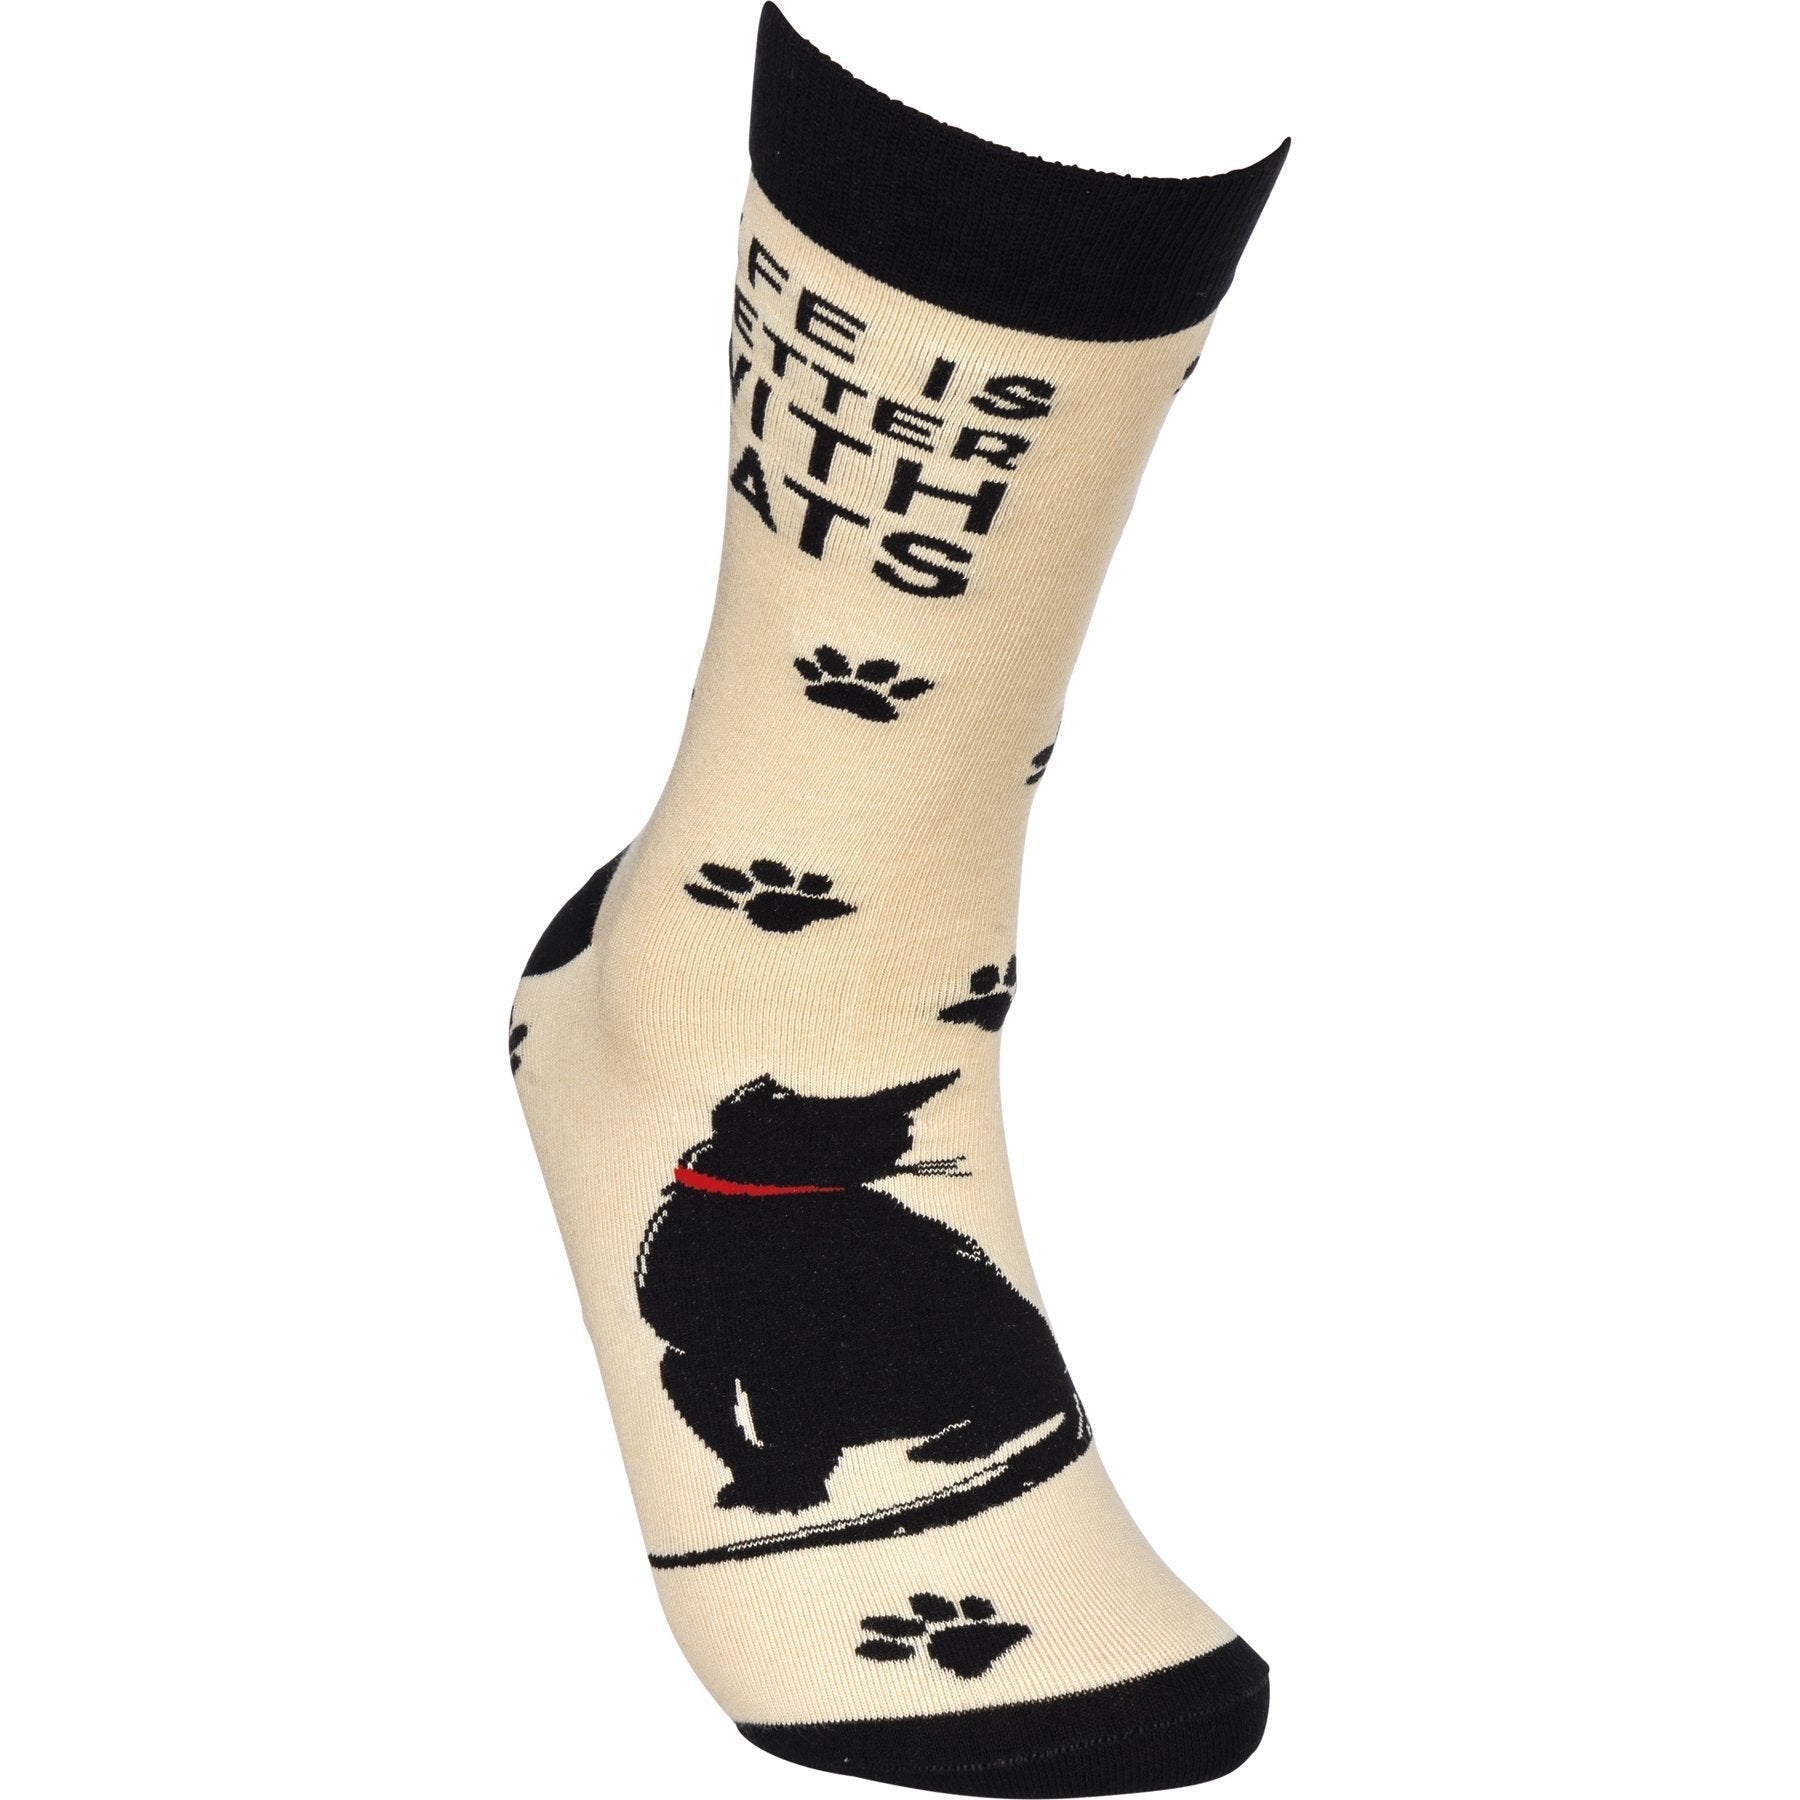 Cat Work Socks With A Black Cat Print